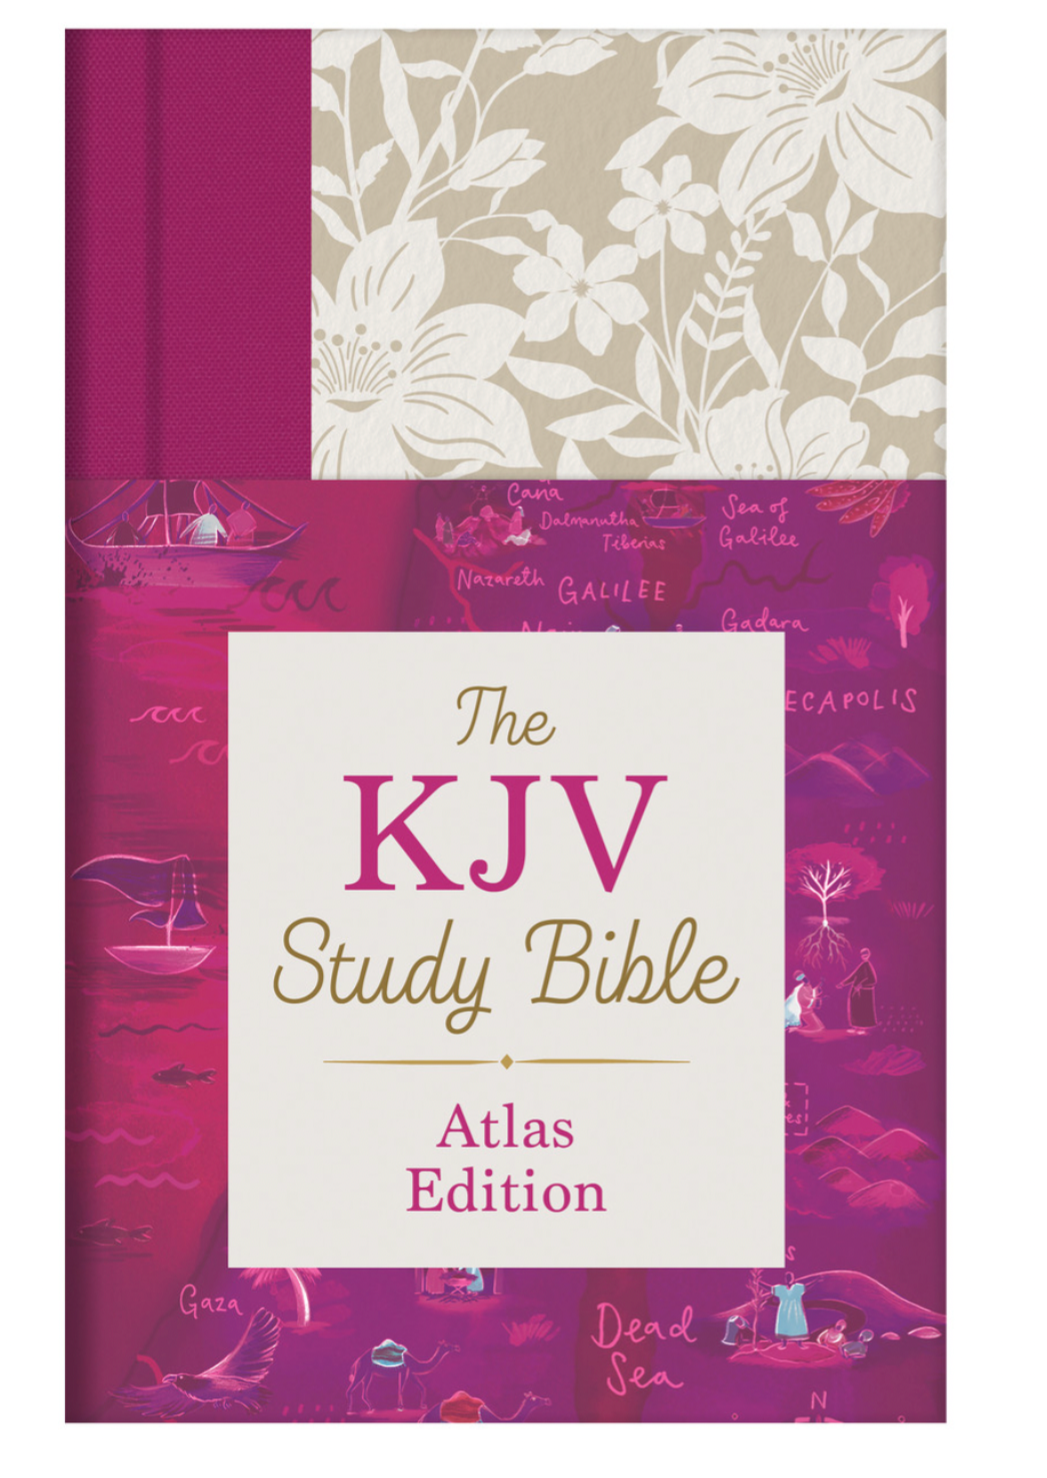 The KJV Study Bible: Atlas Edition Wildflower Bouquet Accessories